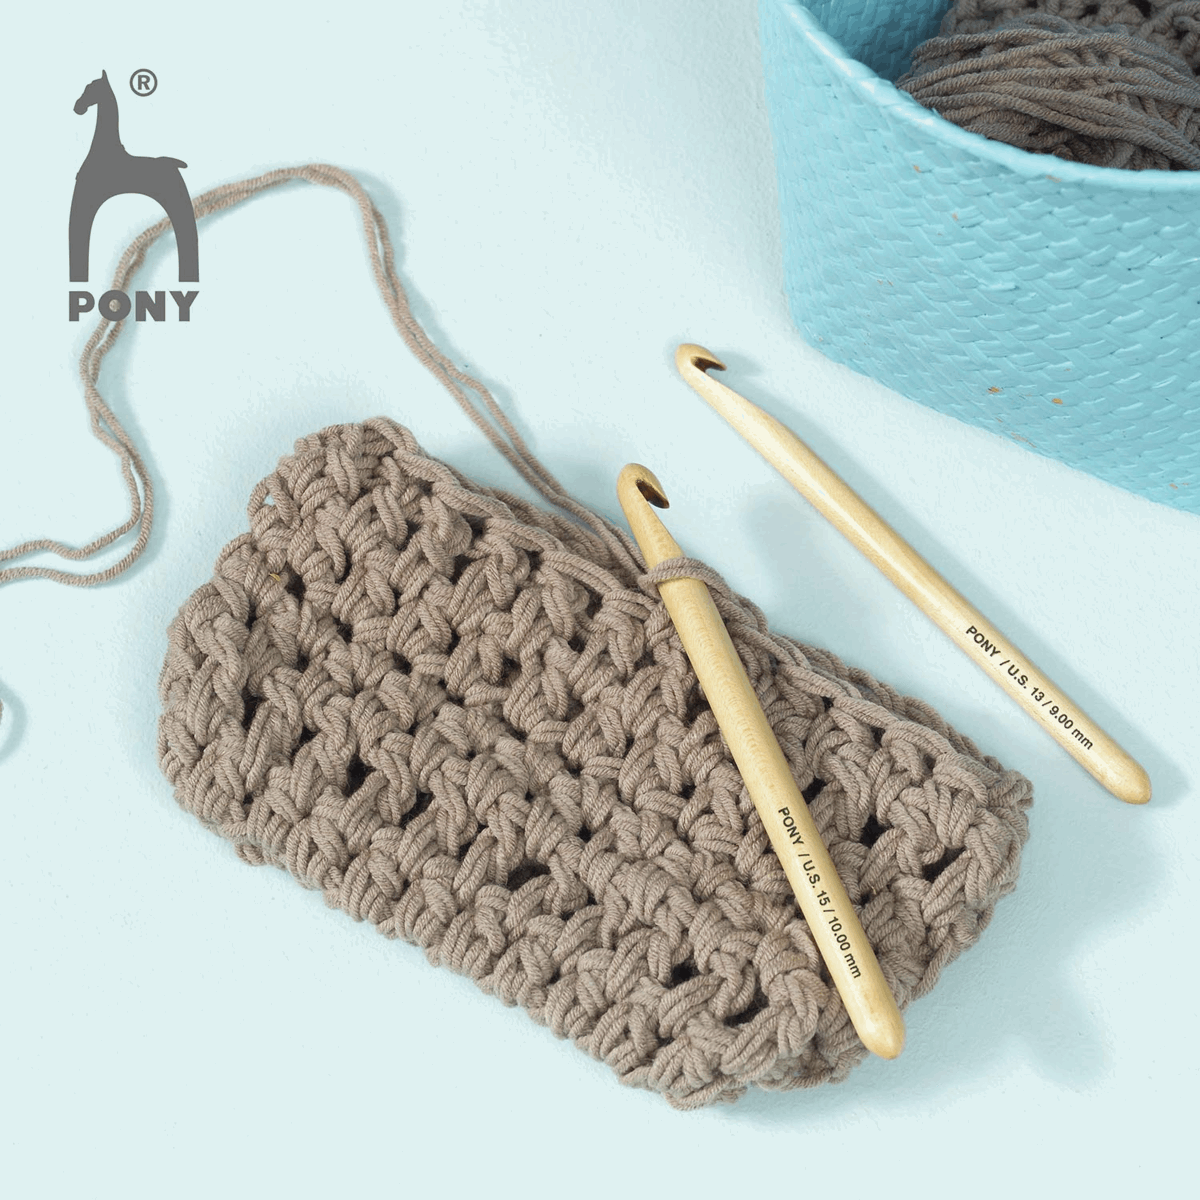 Pony Crochet Hook 4mm x 15cm